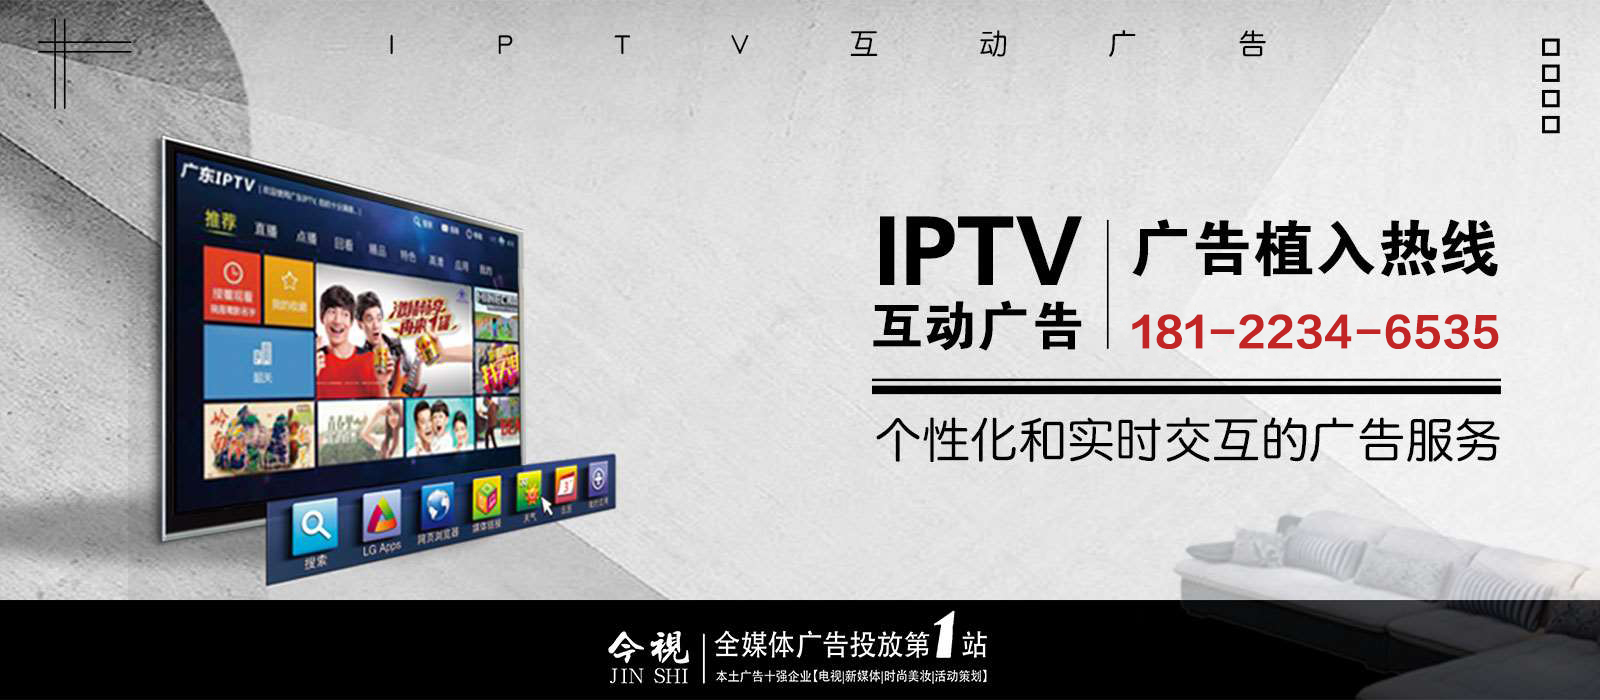 IPTV广告投放电话400-158-3088